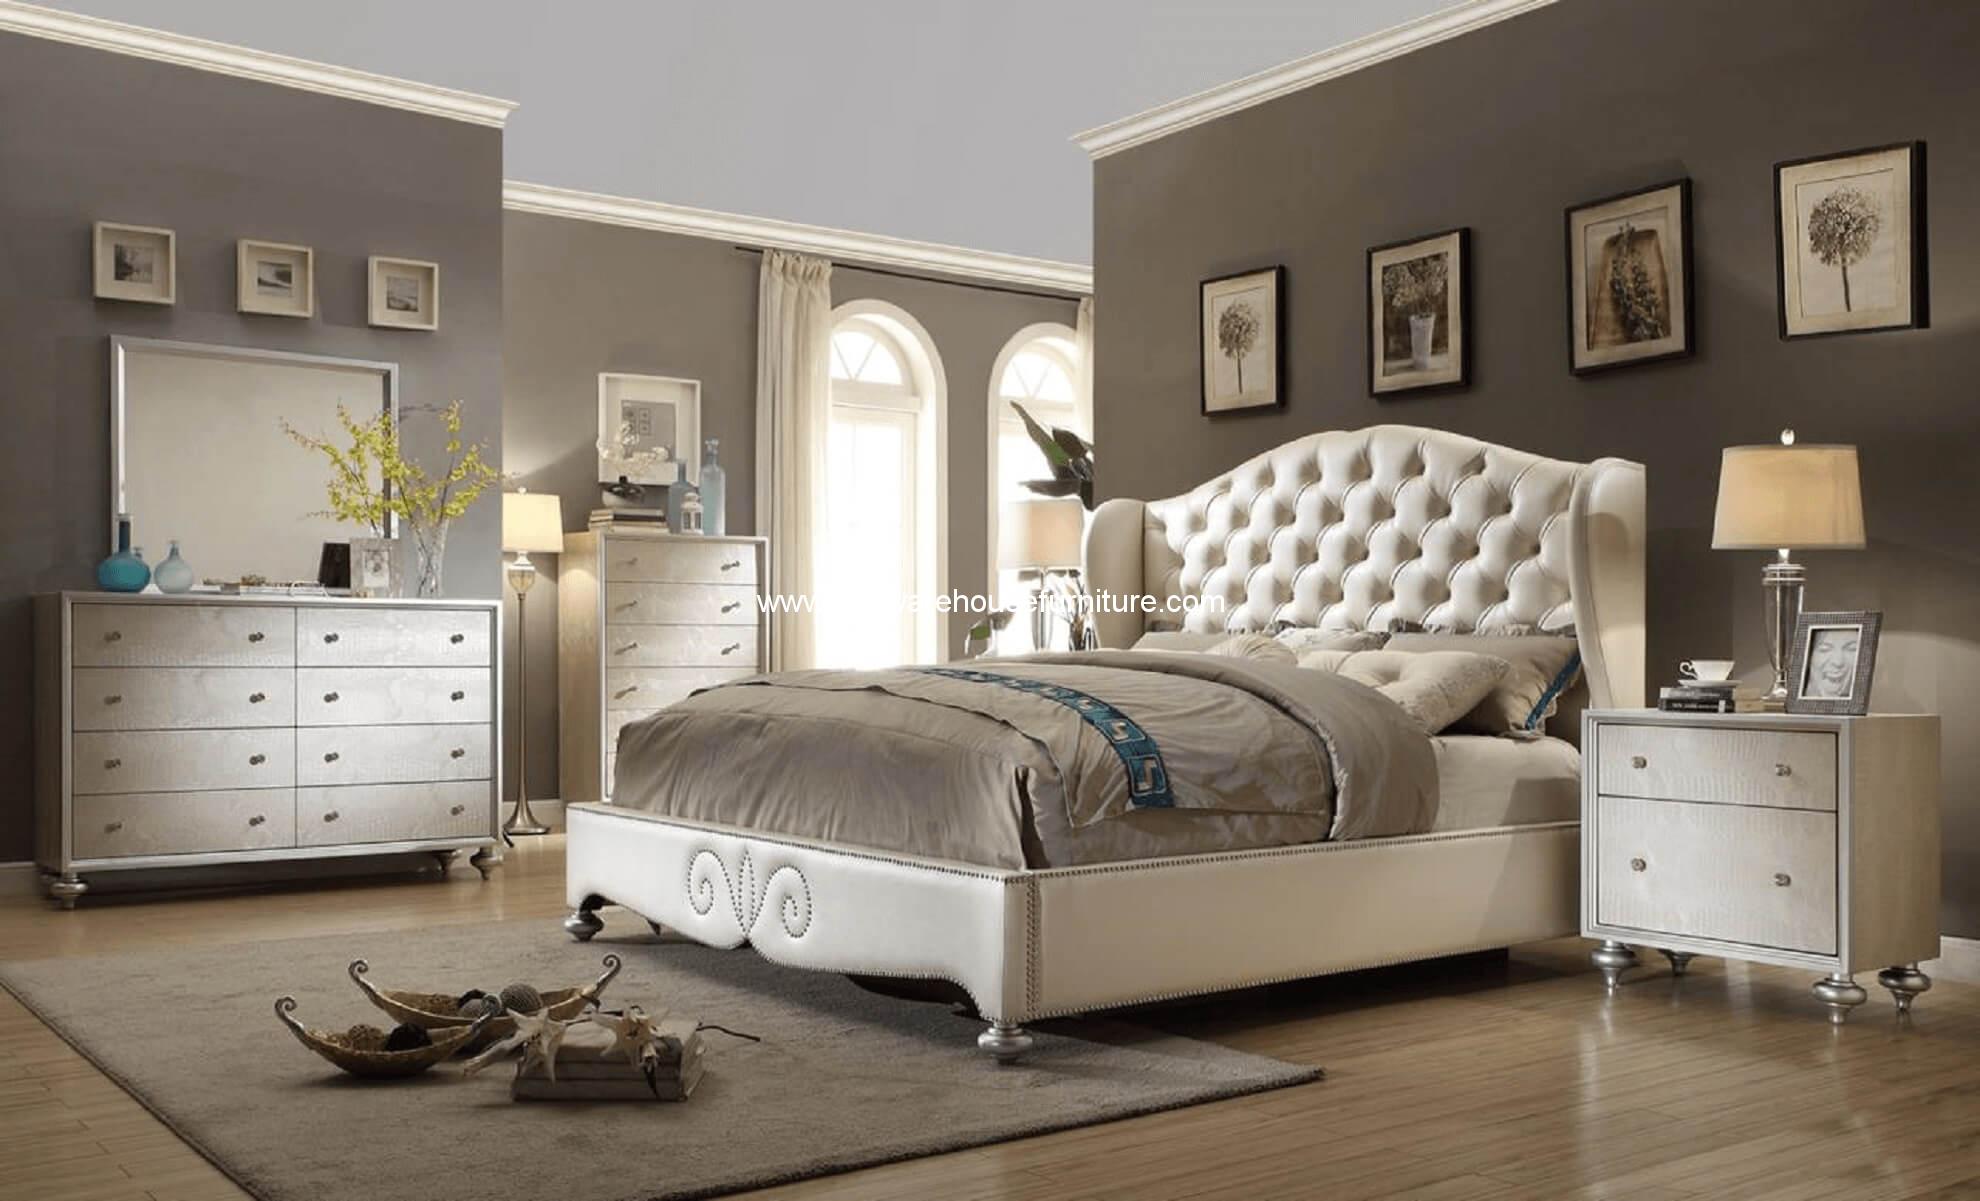 paris bedroom furniture range